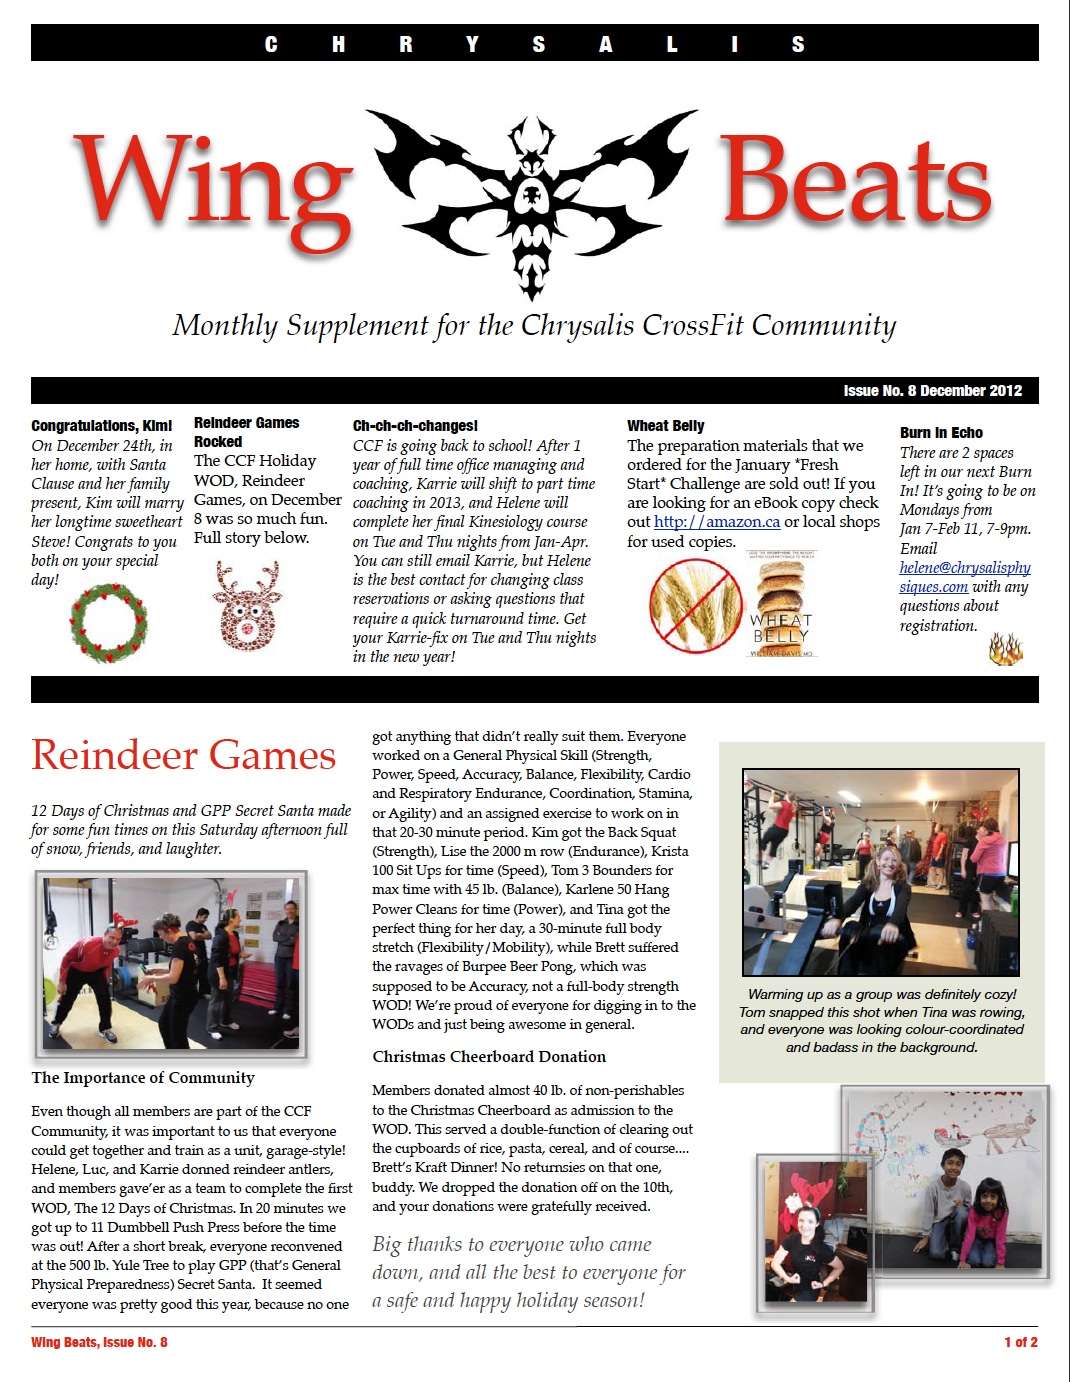 WingBeats Issue #8 - December 2012